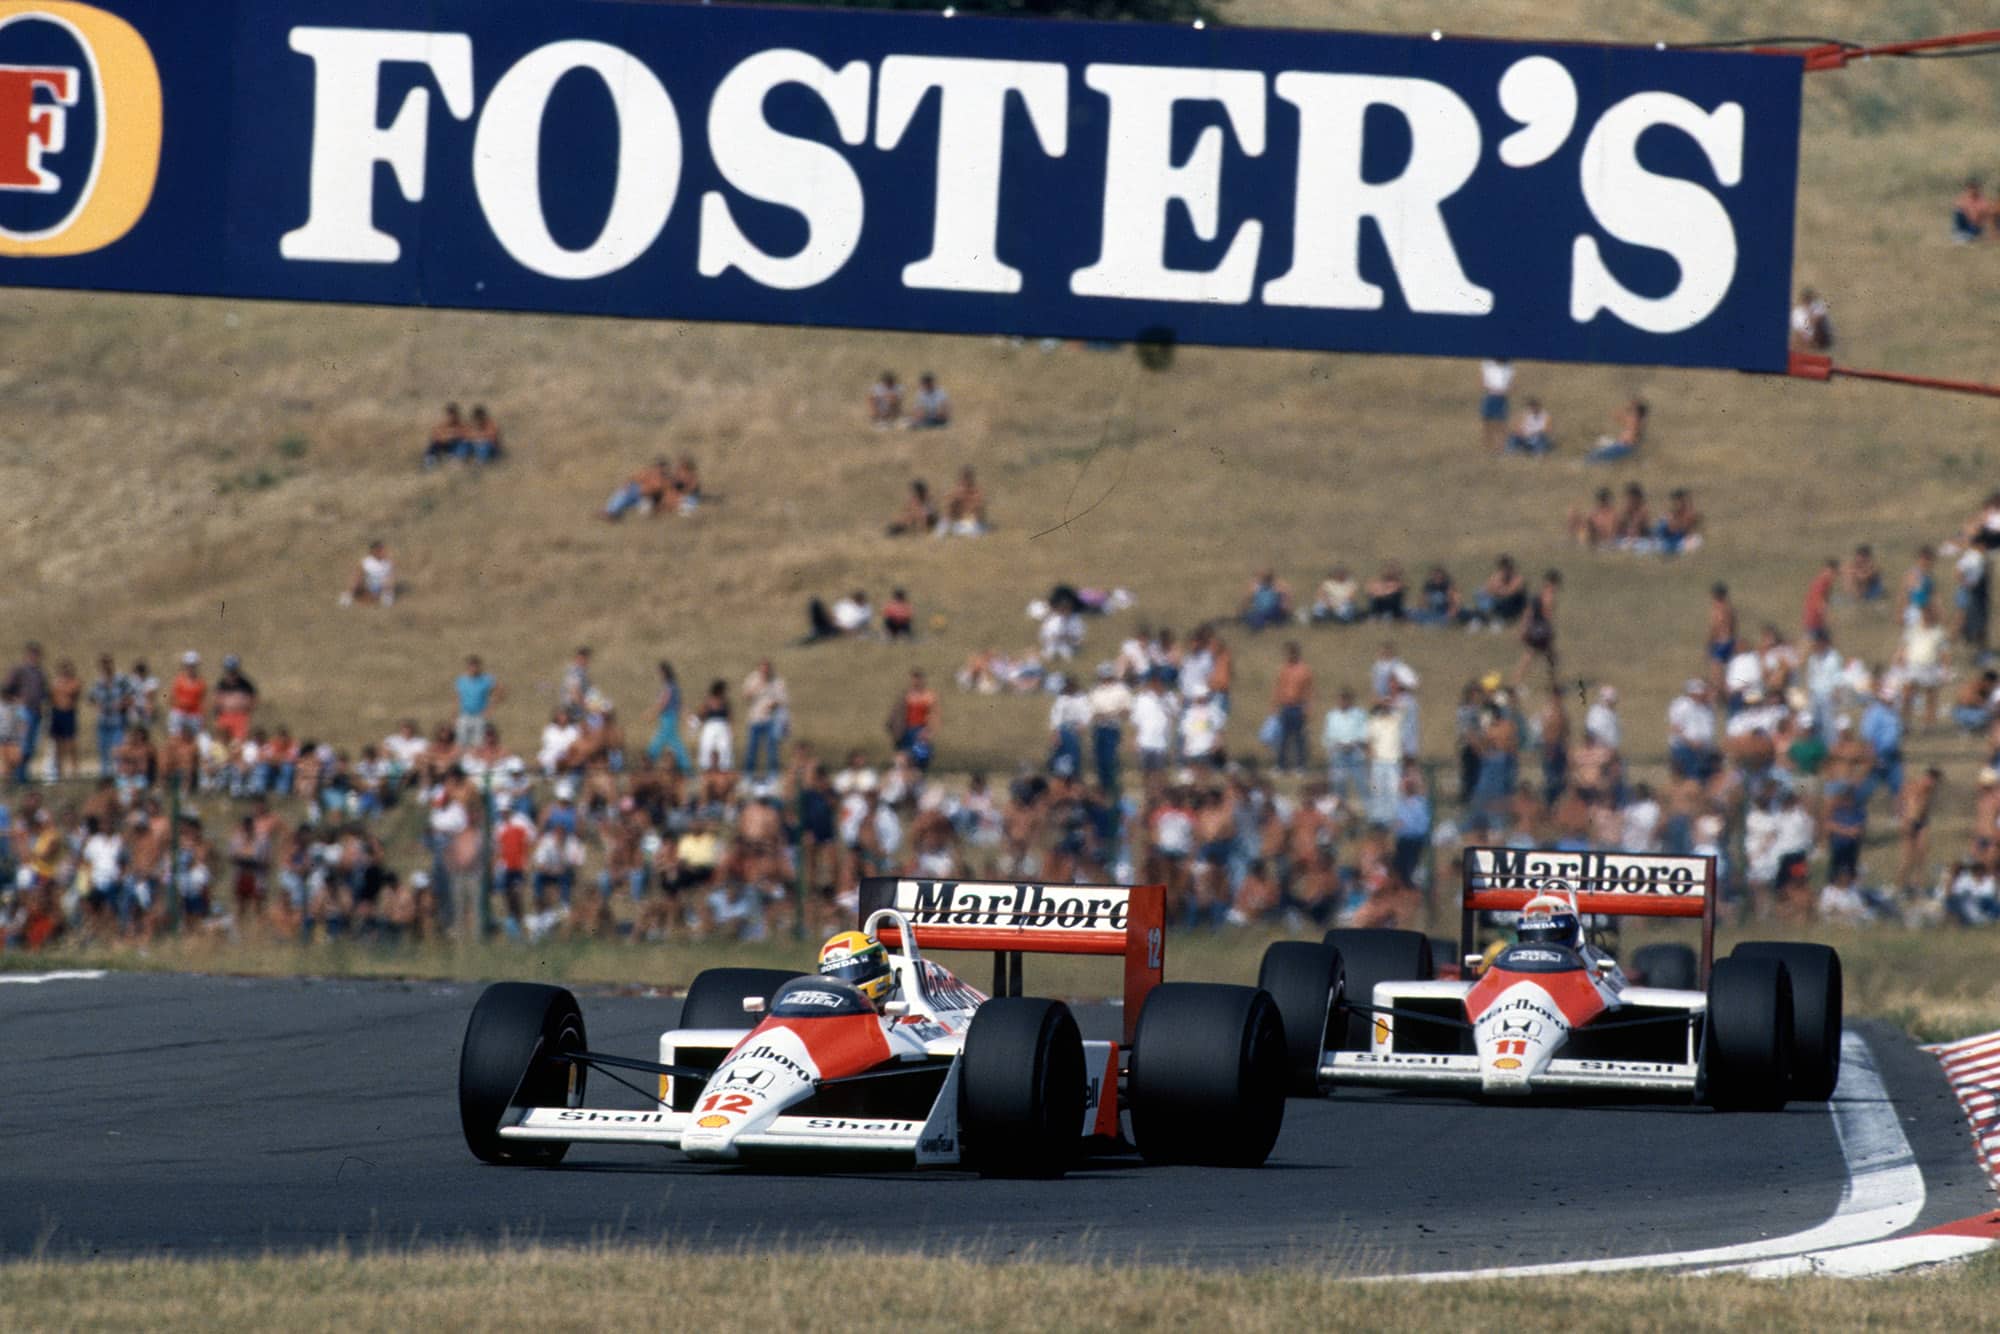 Ayrton Senna and Alain Prost in the 1988 McLaren-Honda MP4/4